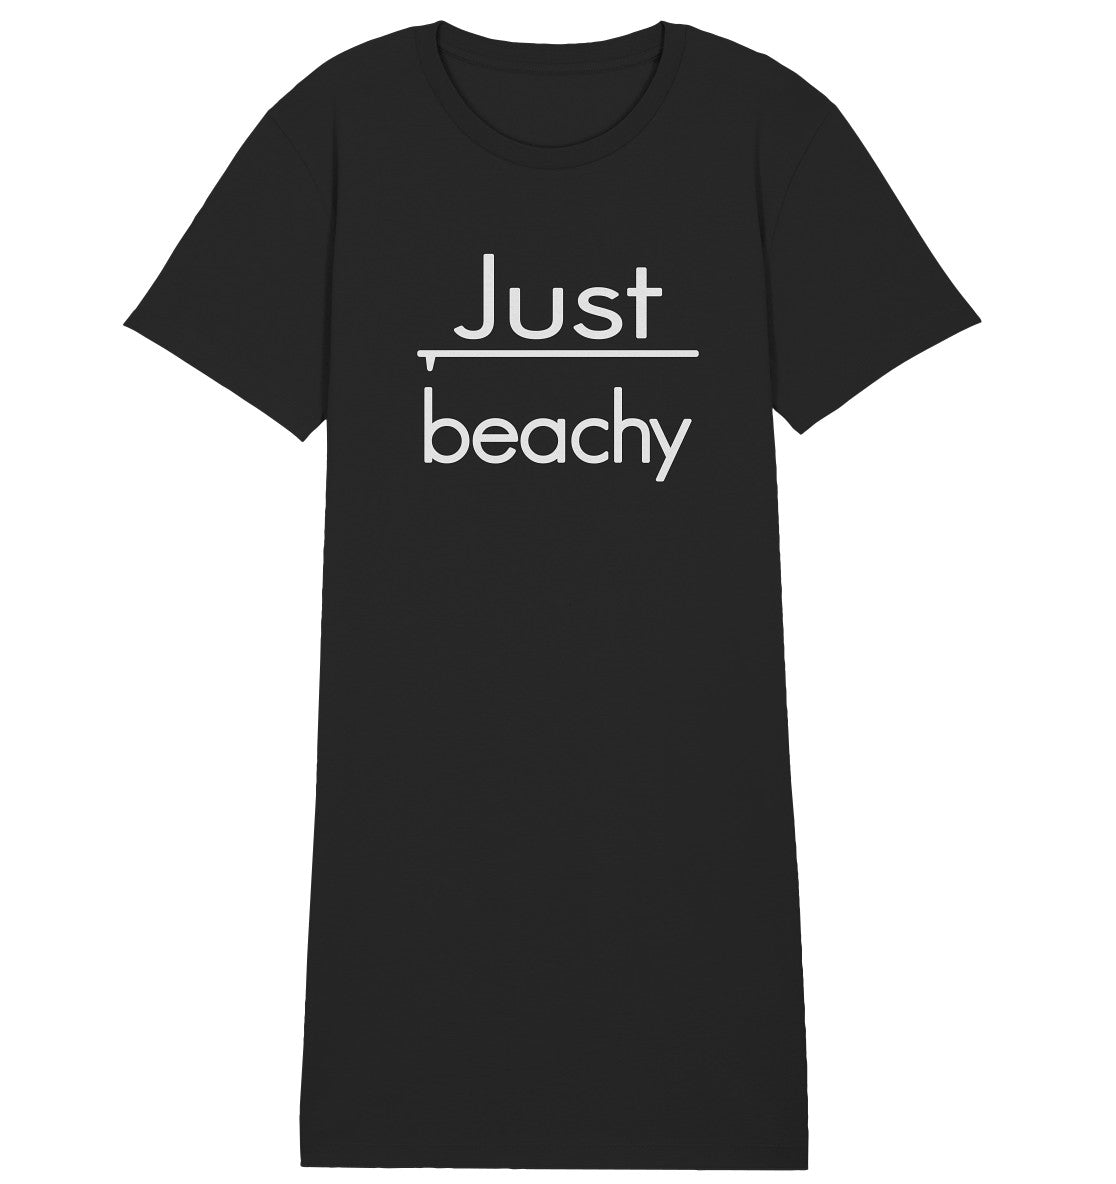 Boardtime-Just beachy - Ladies Organic Shirt Dress